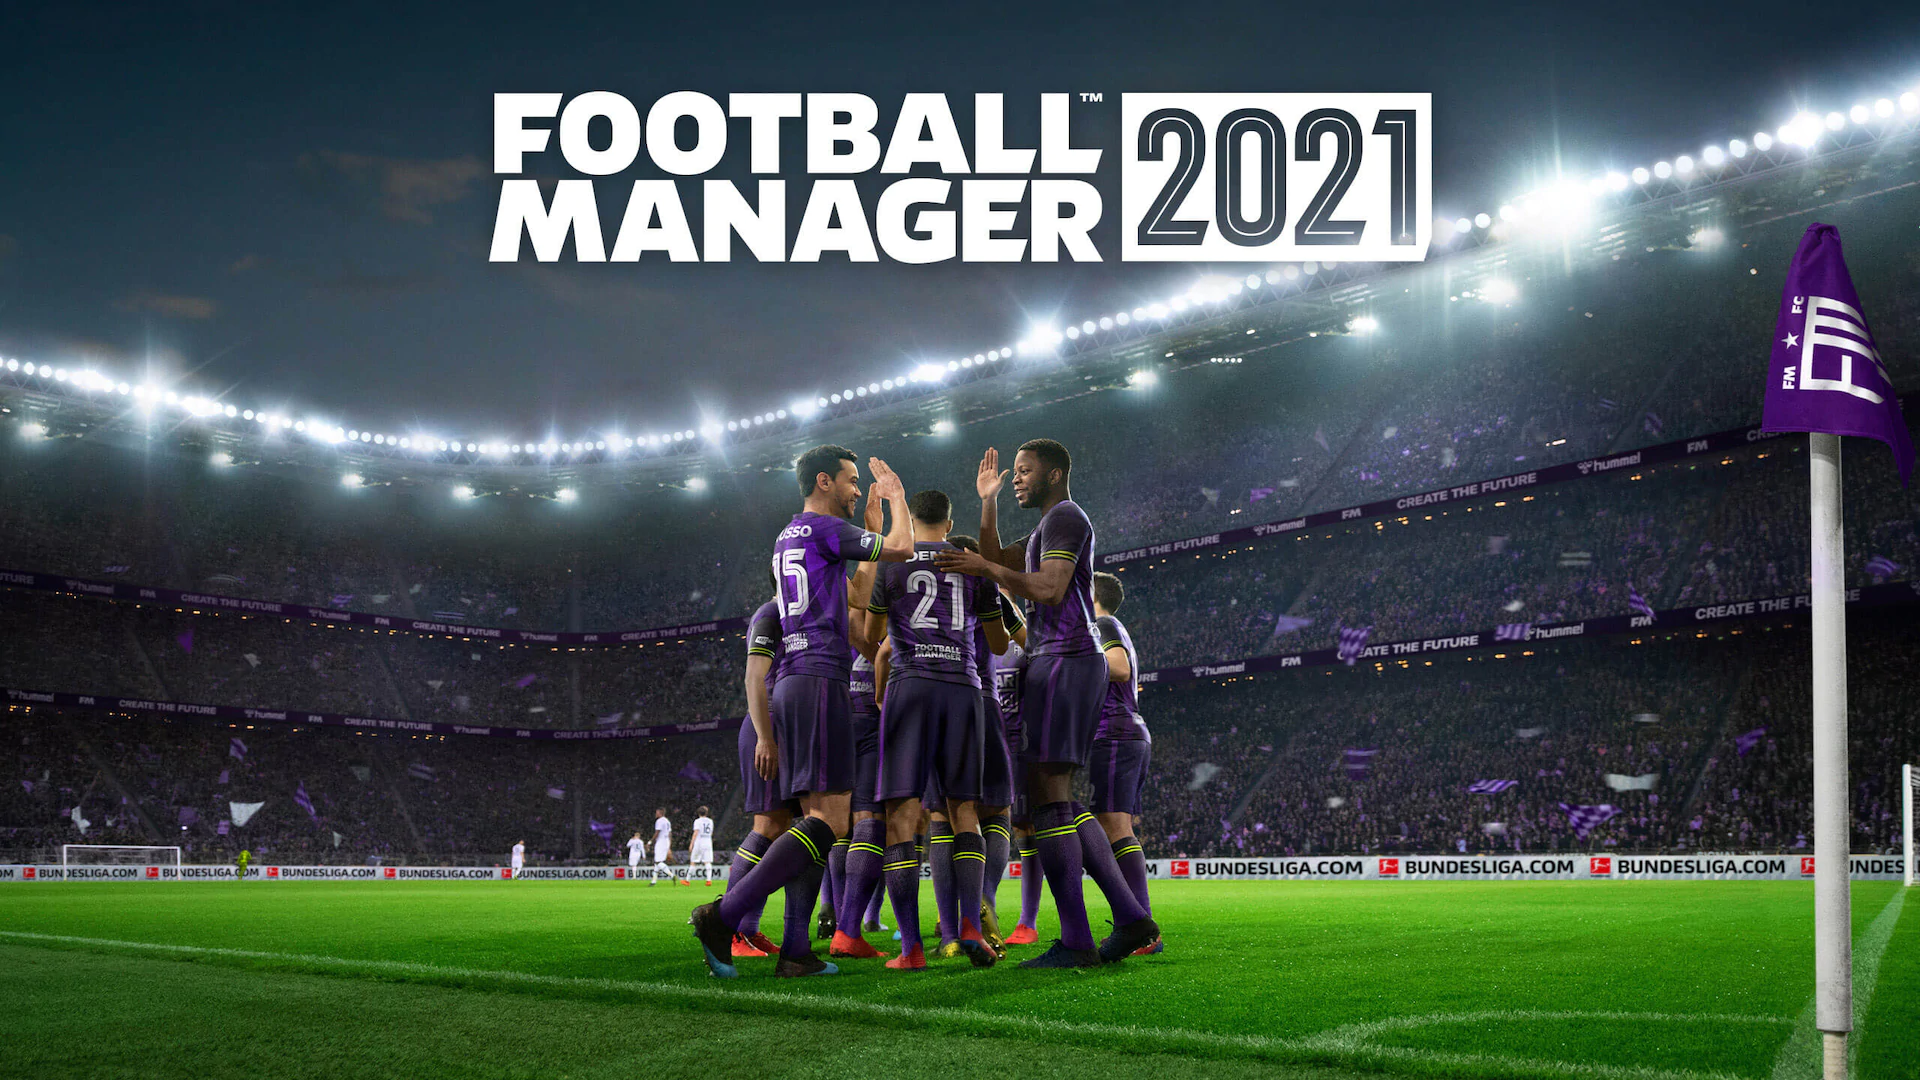 Football Manager 2021 crash at launch